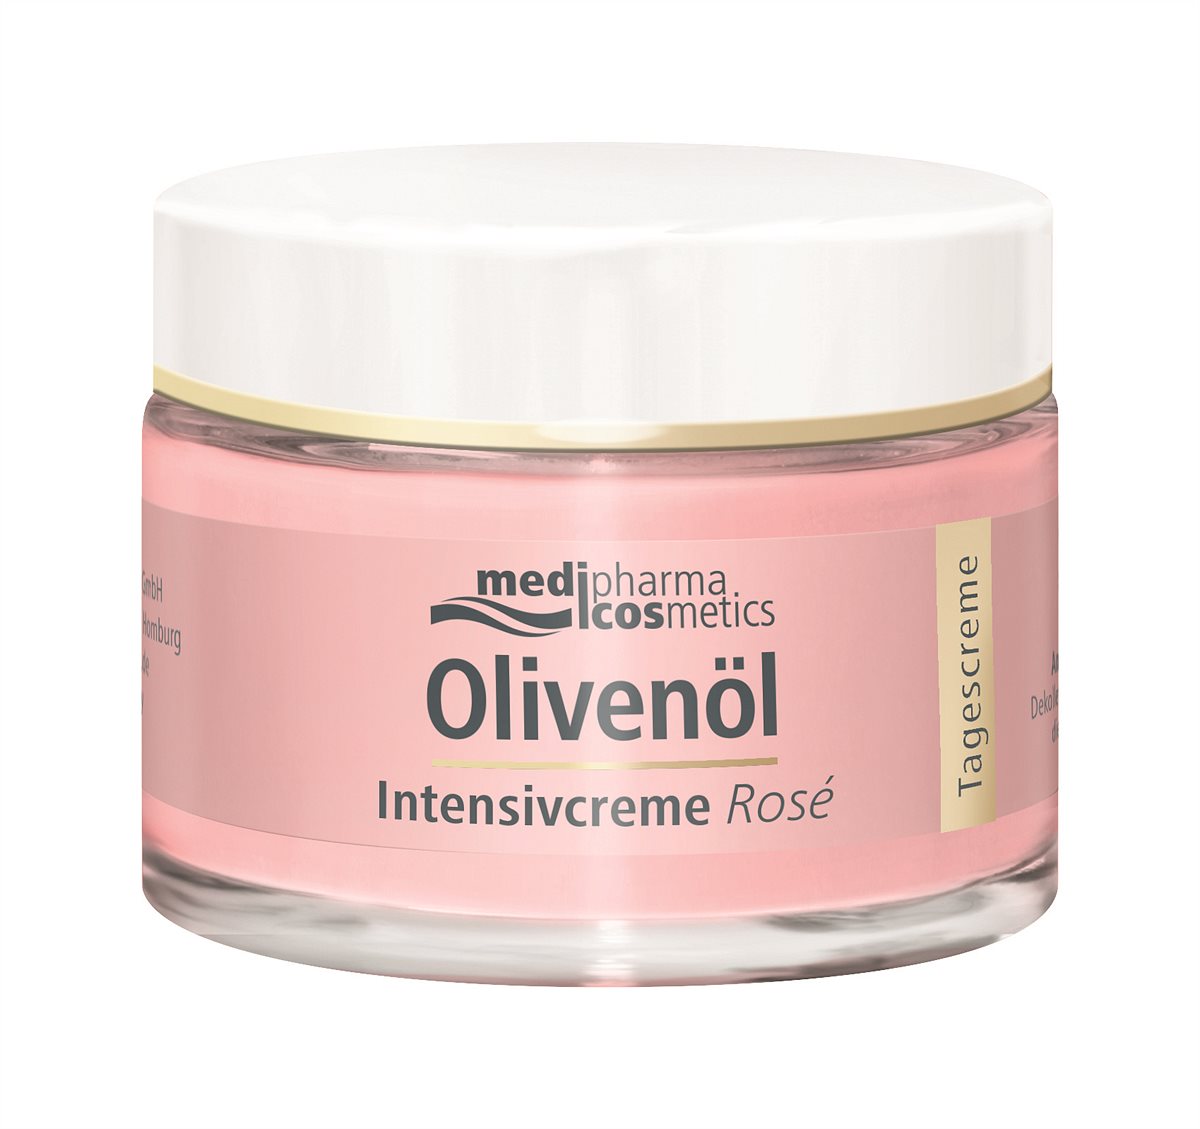 medipharma cosmetics Olivenöl Intensivcreme Rosé Tagescreme